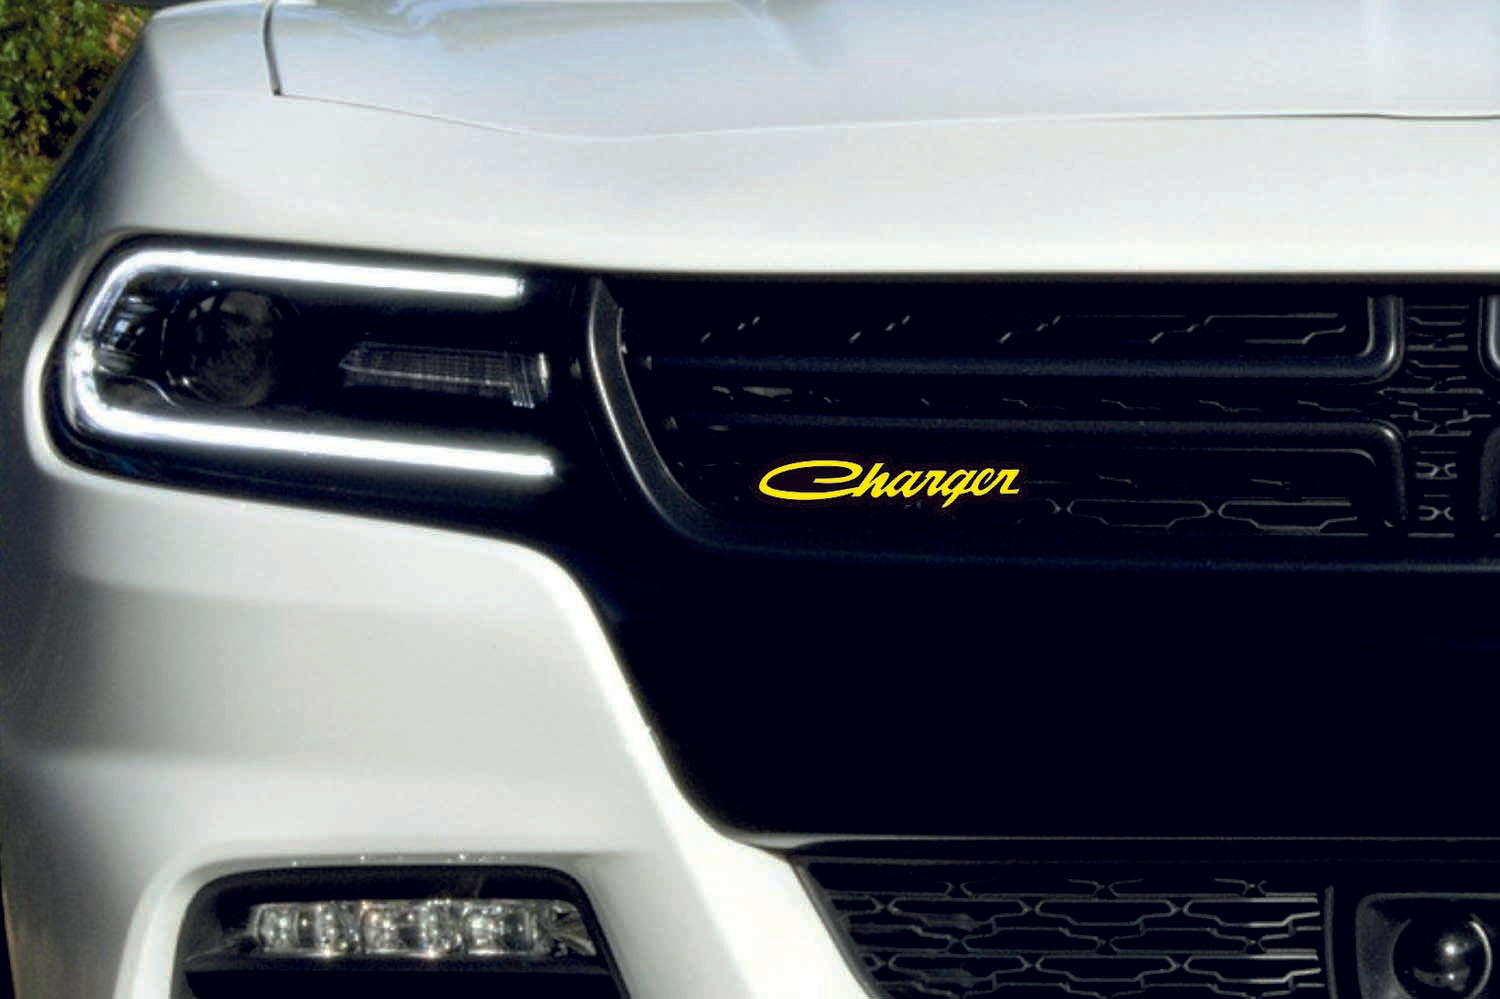 DODGE Radiator grille emblem with Dodge Charger old logo - decoinfabric